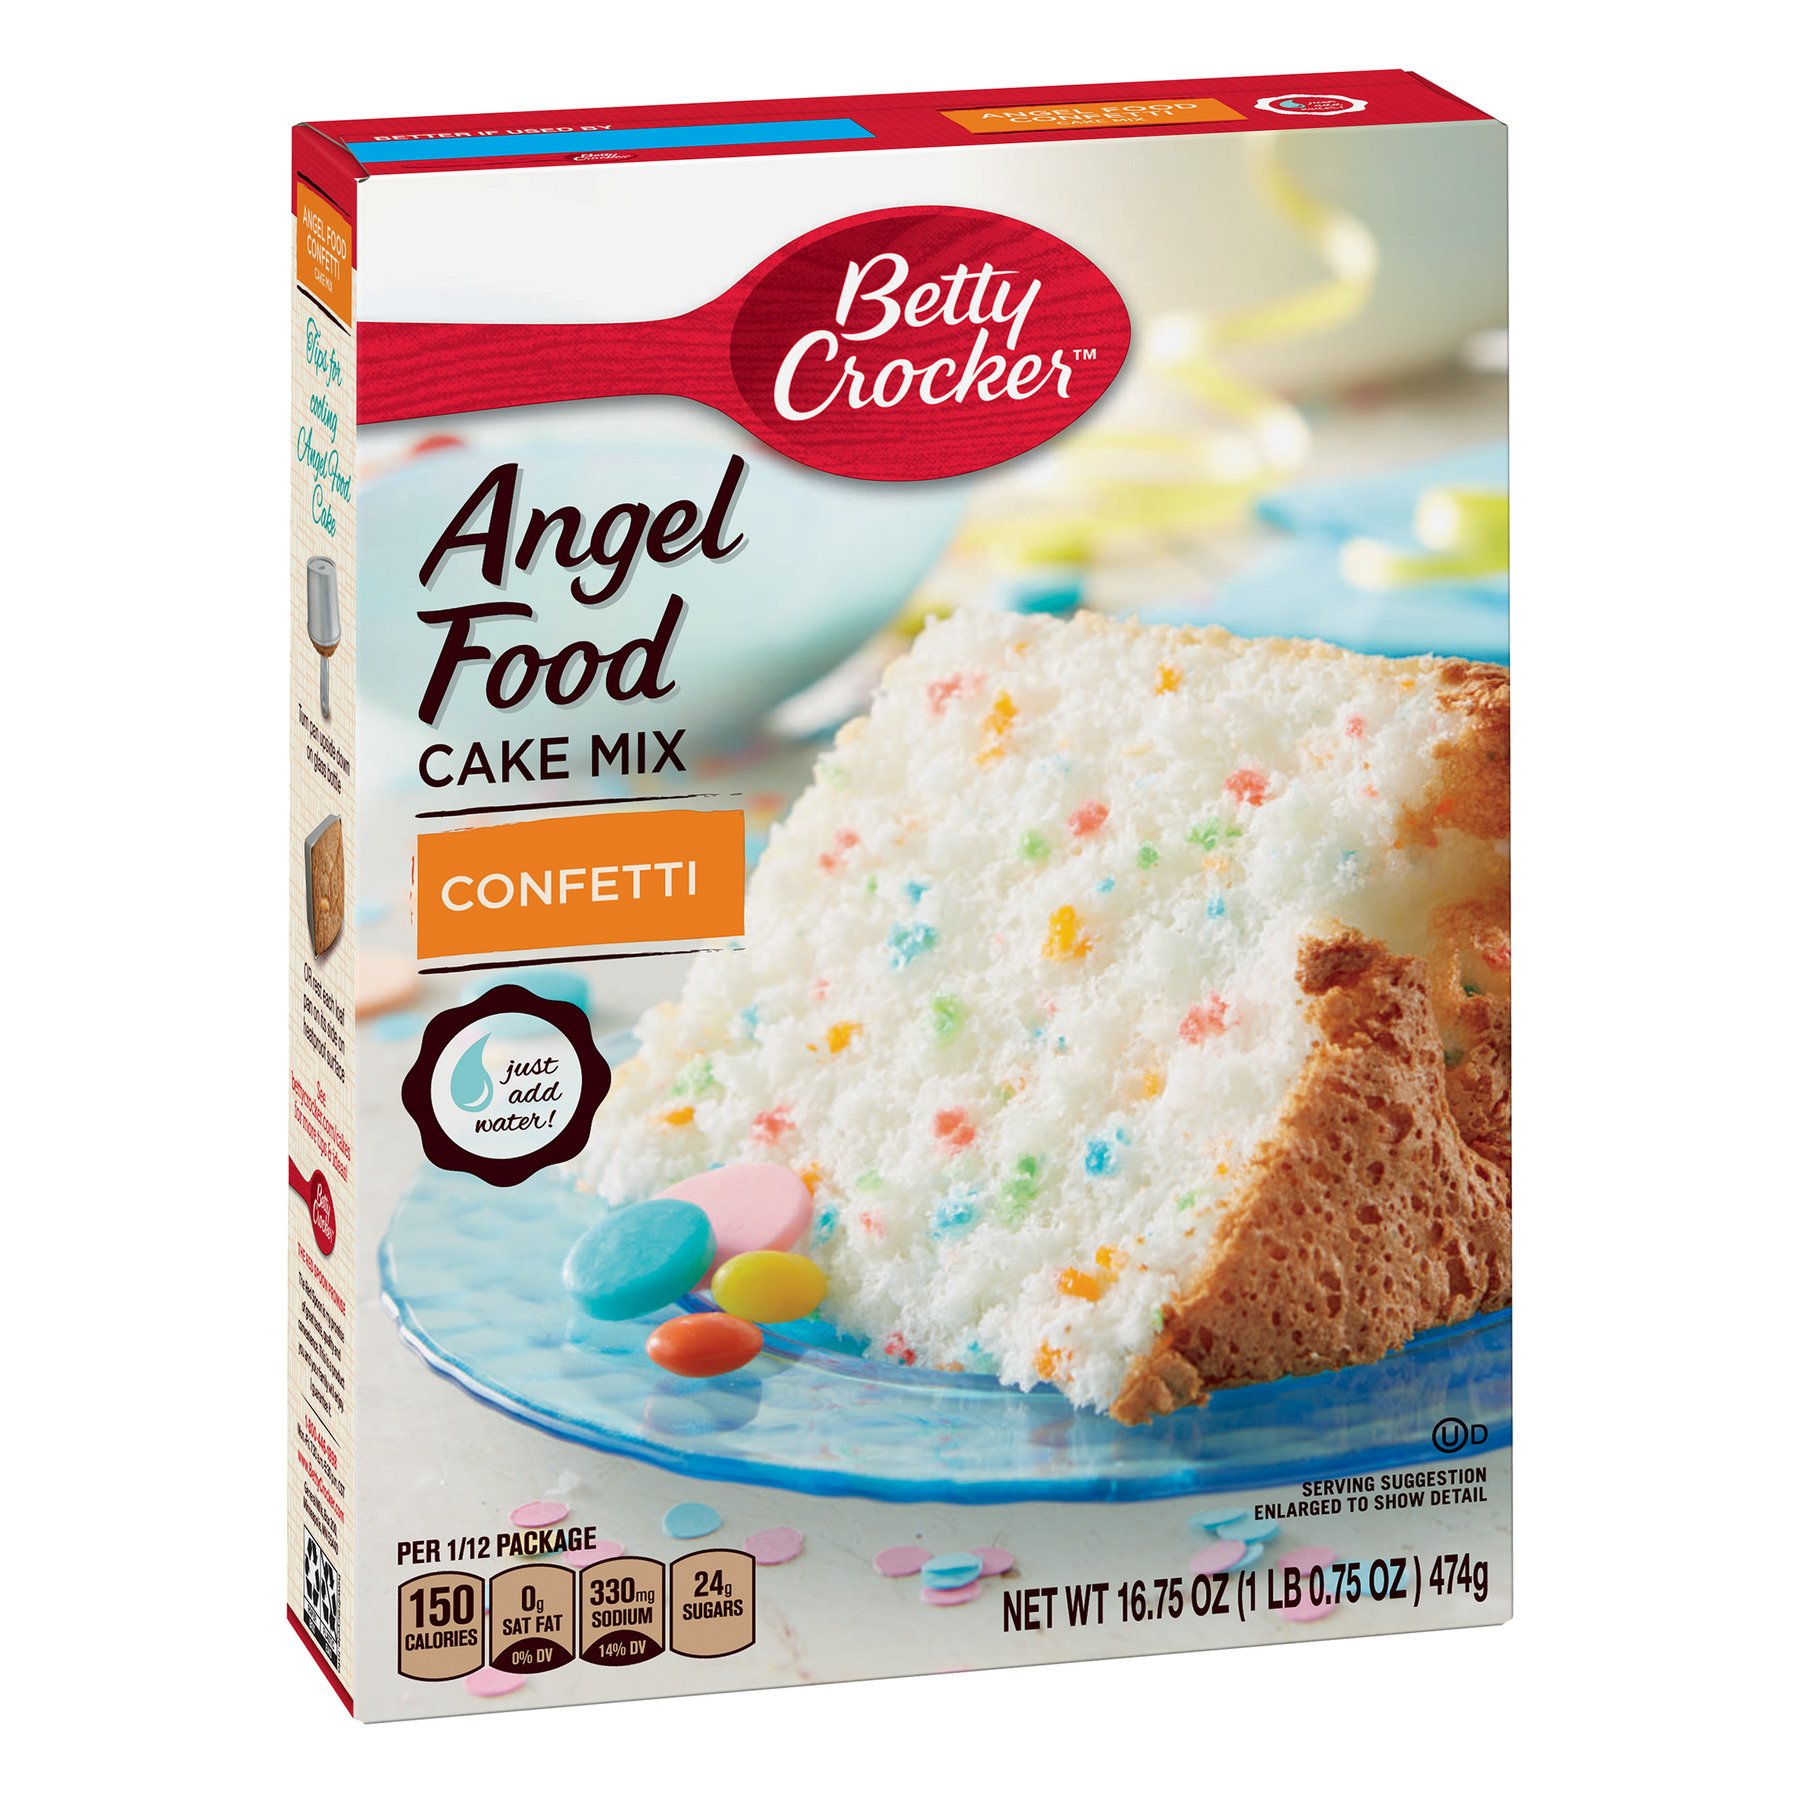 Betty Crocker Angel Food Confetti Cake Mix, 16.75 oz